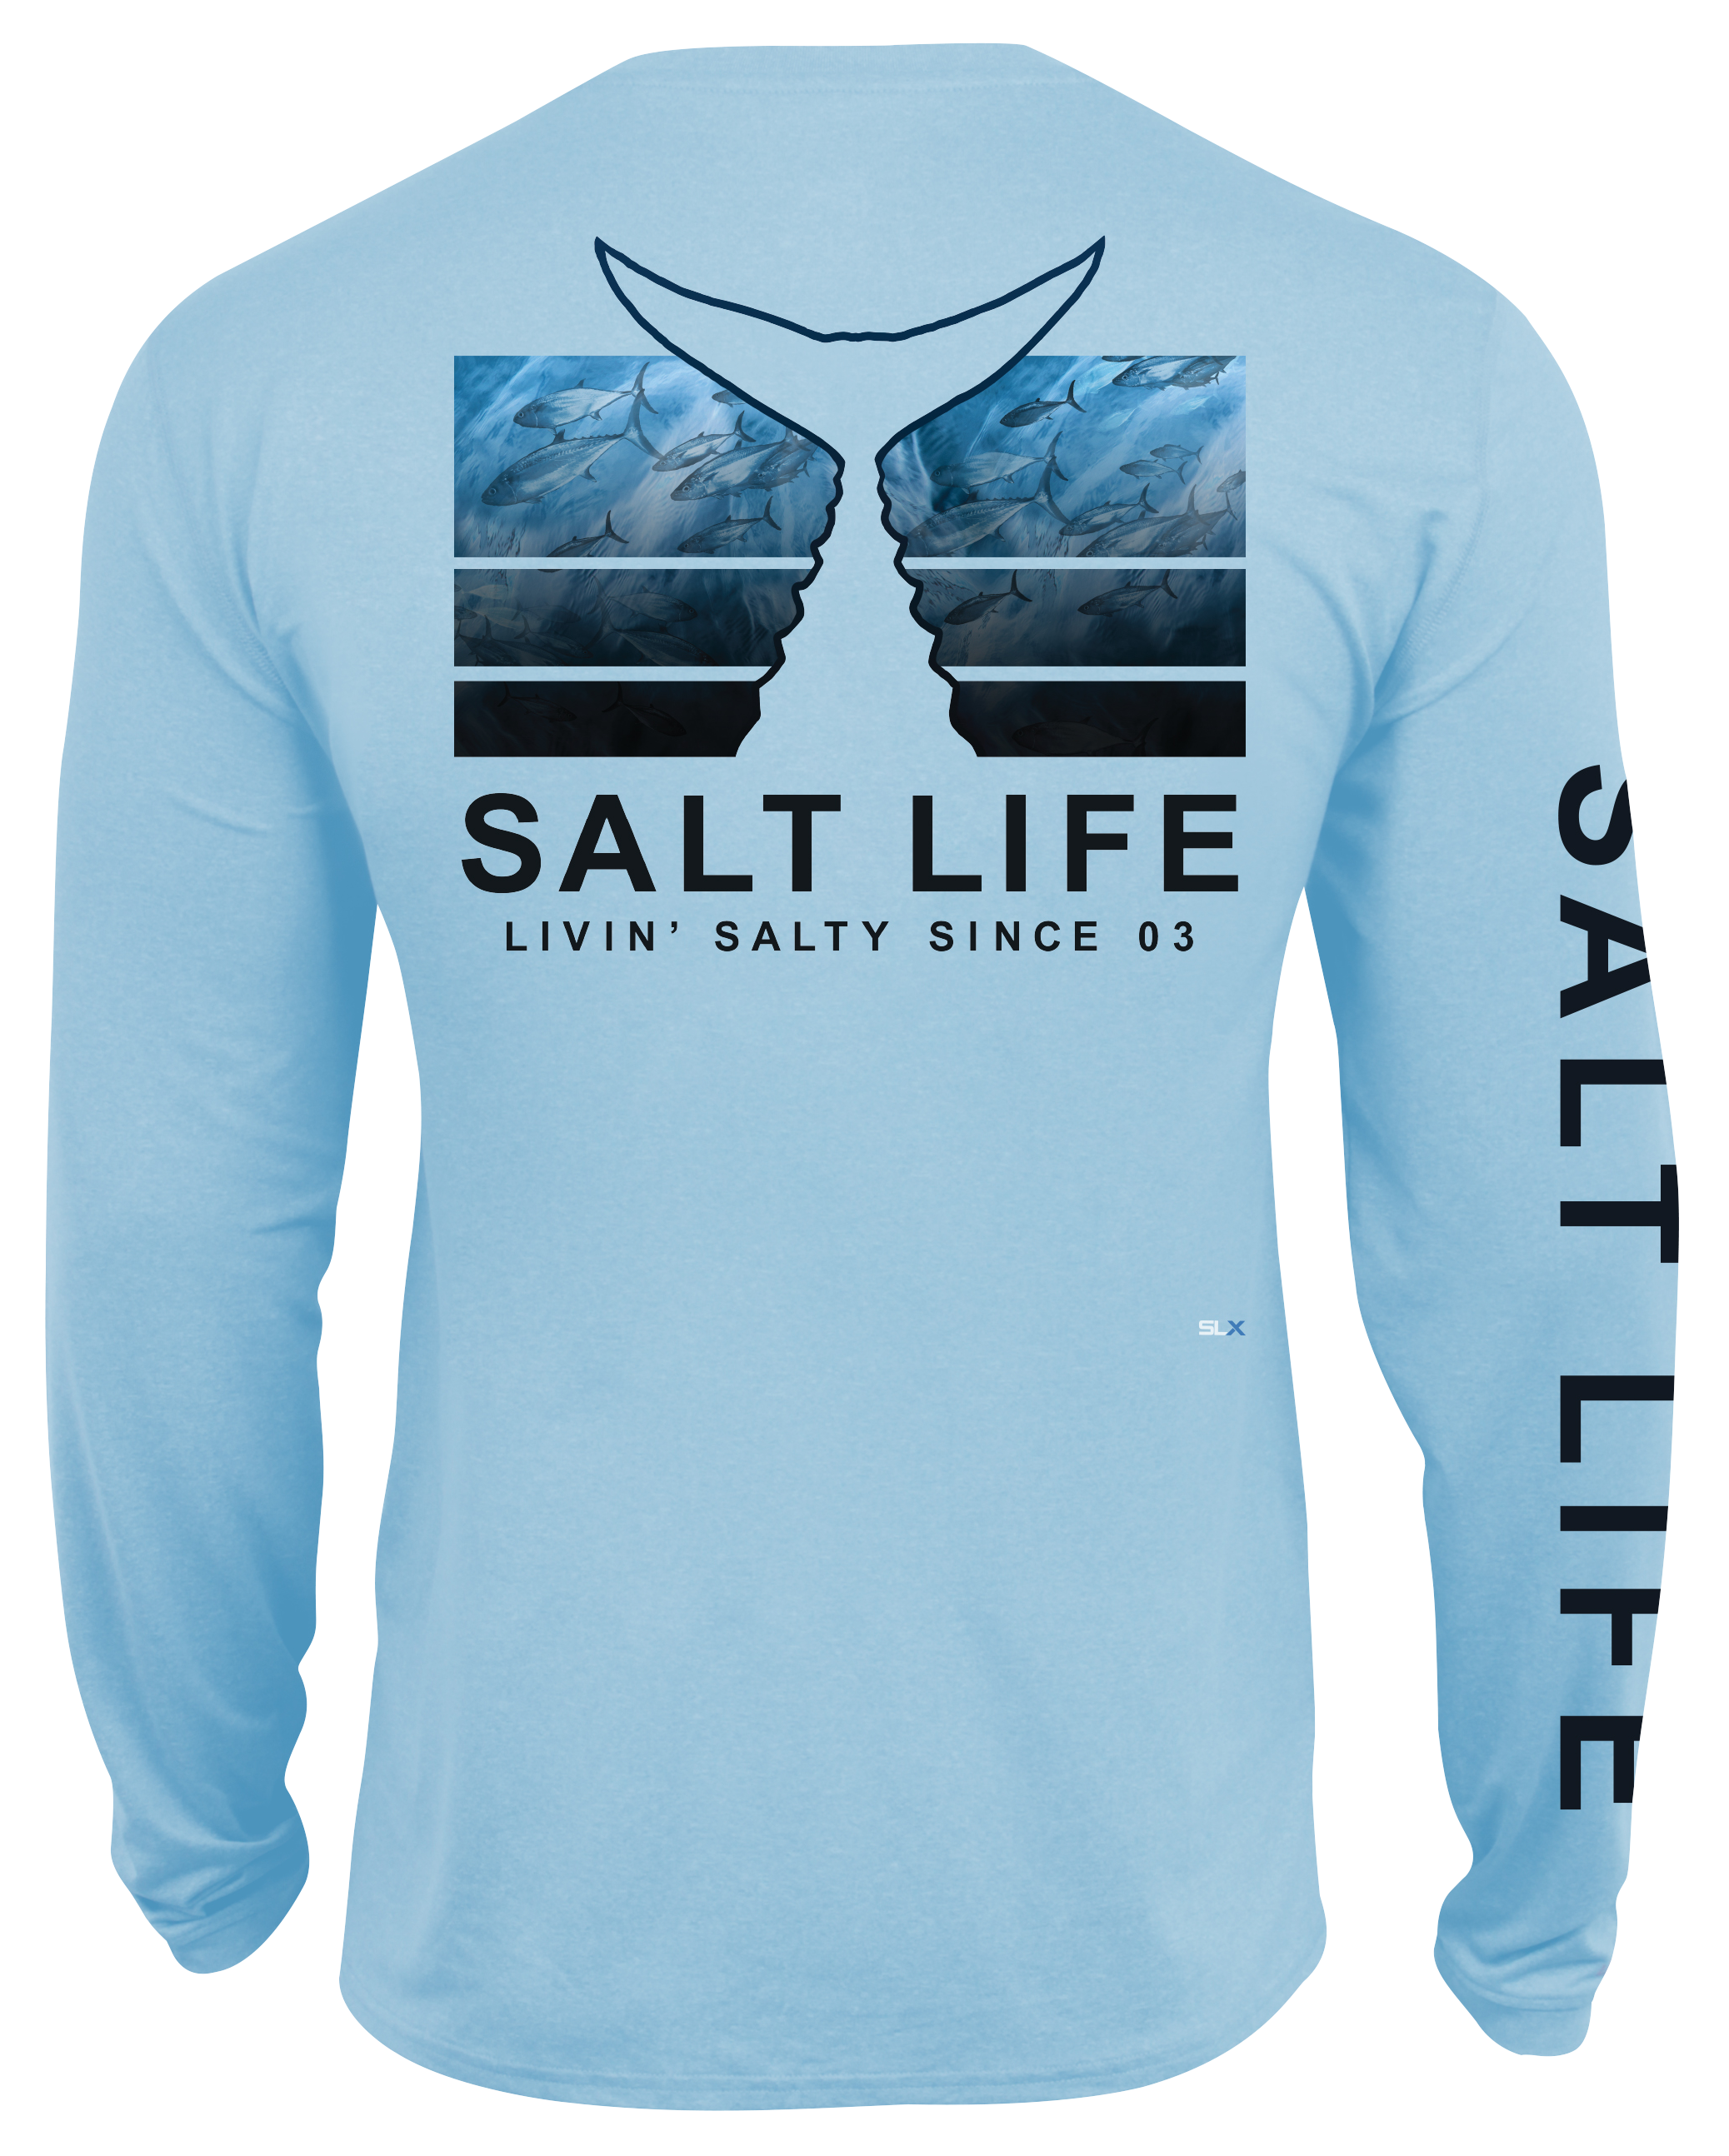 Salt Life Tuna Storm Performance Long-Sleeve Pocket T-Shirt for Men - Sky Blue Heather - L